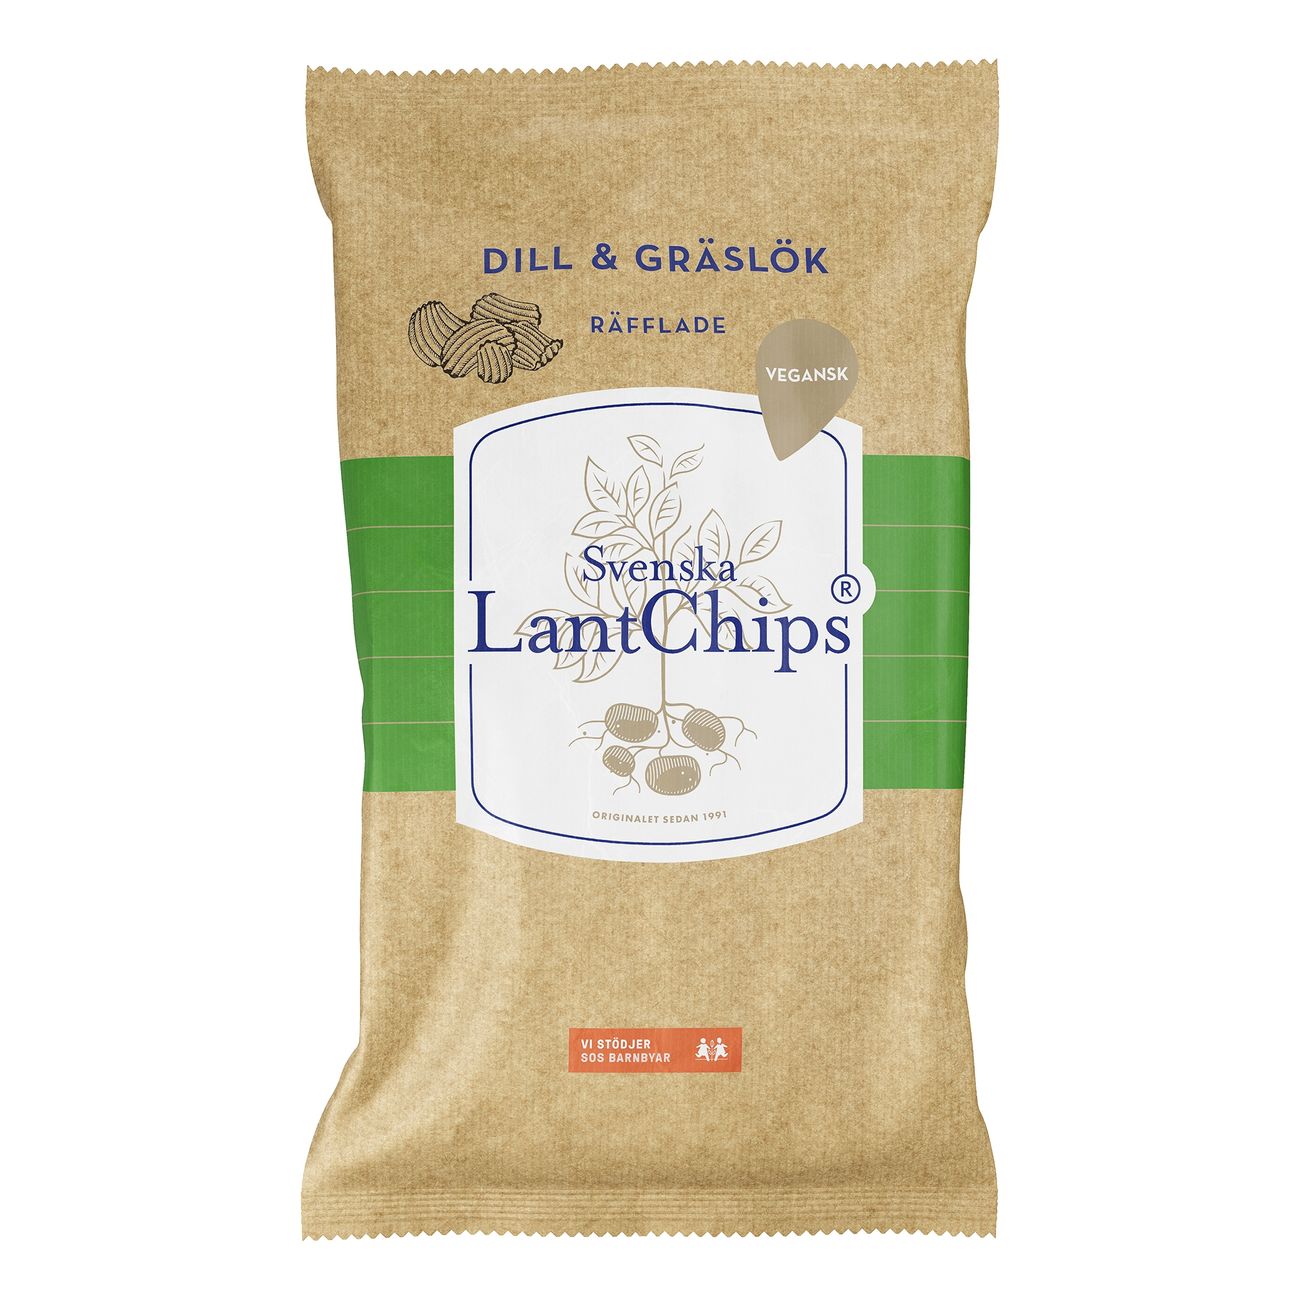 lantchips-dill-graslok-rafflade-100924-2